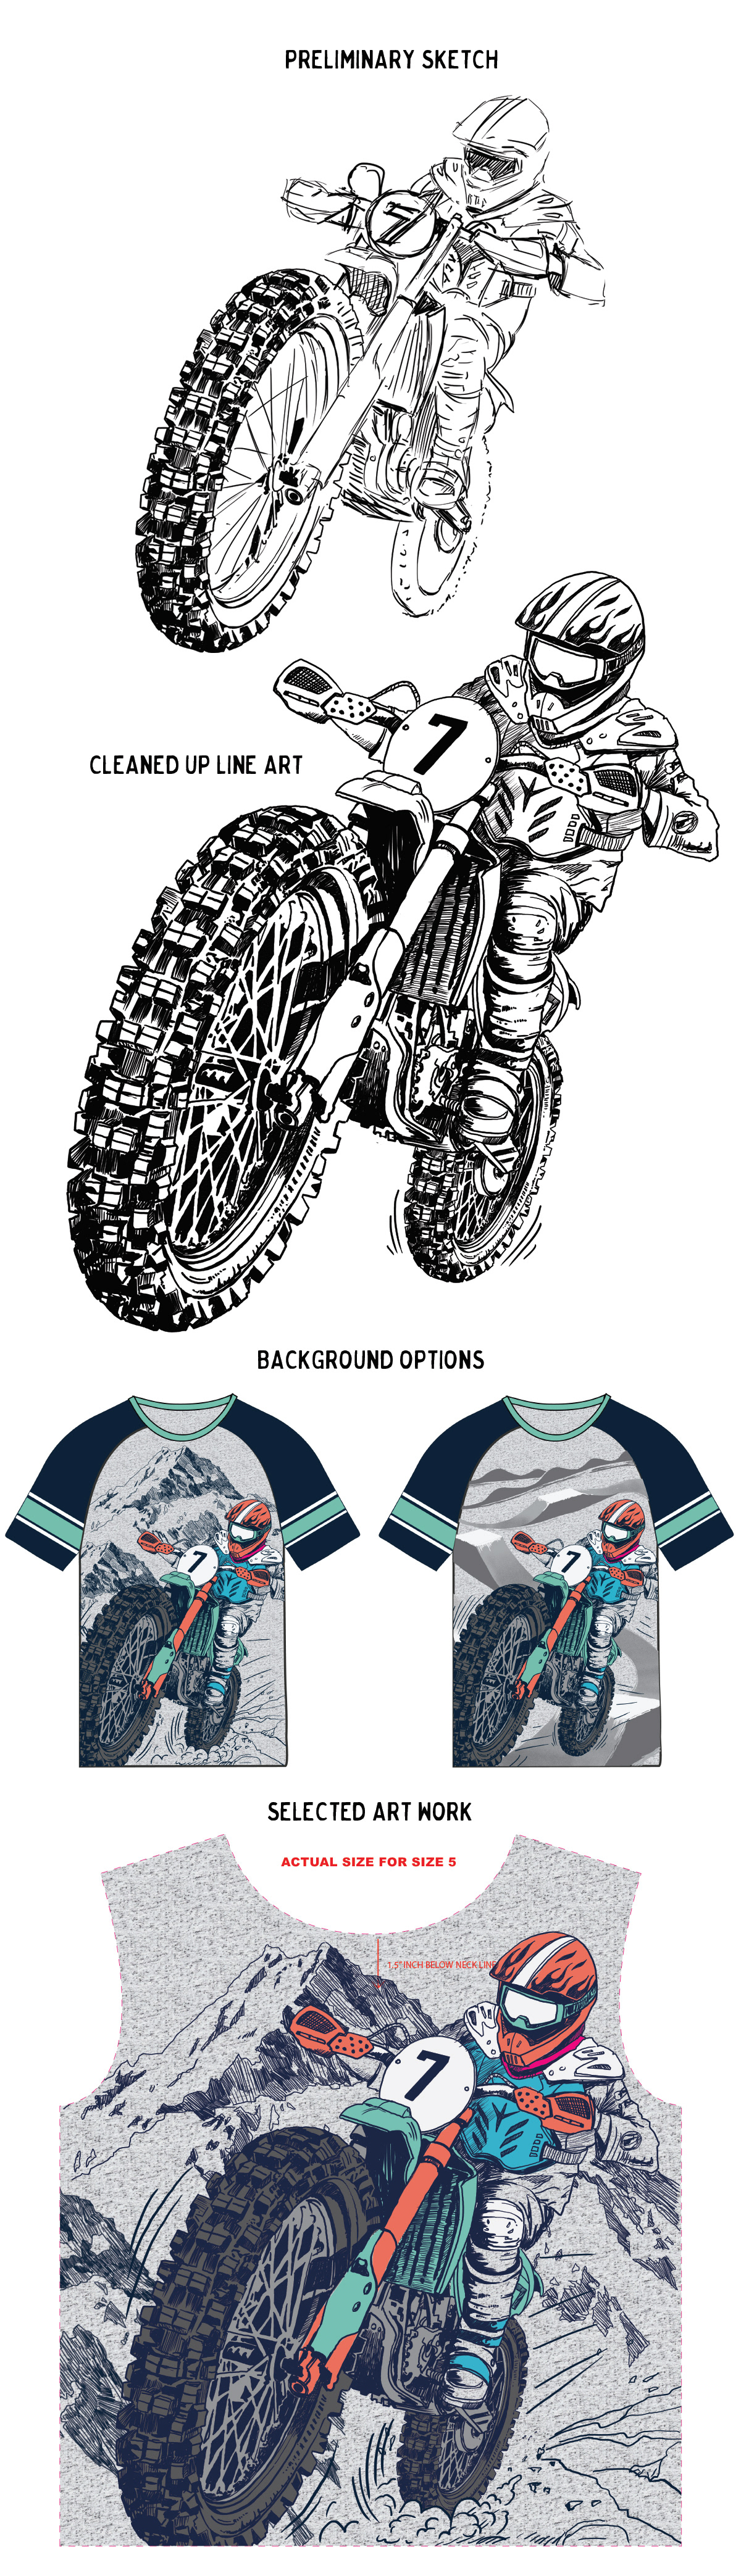 Apparel Design boys fashion graphic tee shirts Kids Clothes Moto Cross race cars screen prints sharks surface design